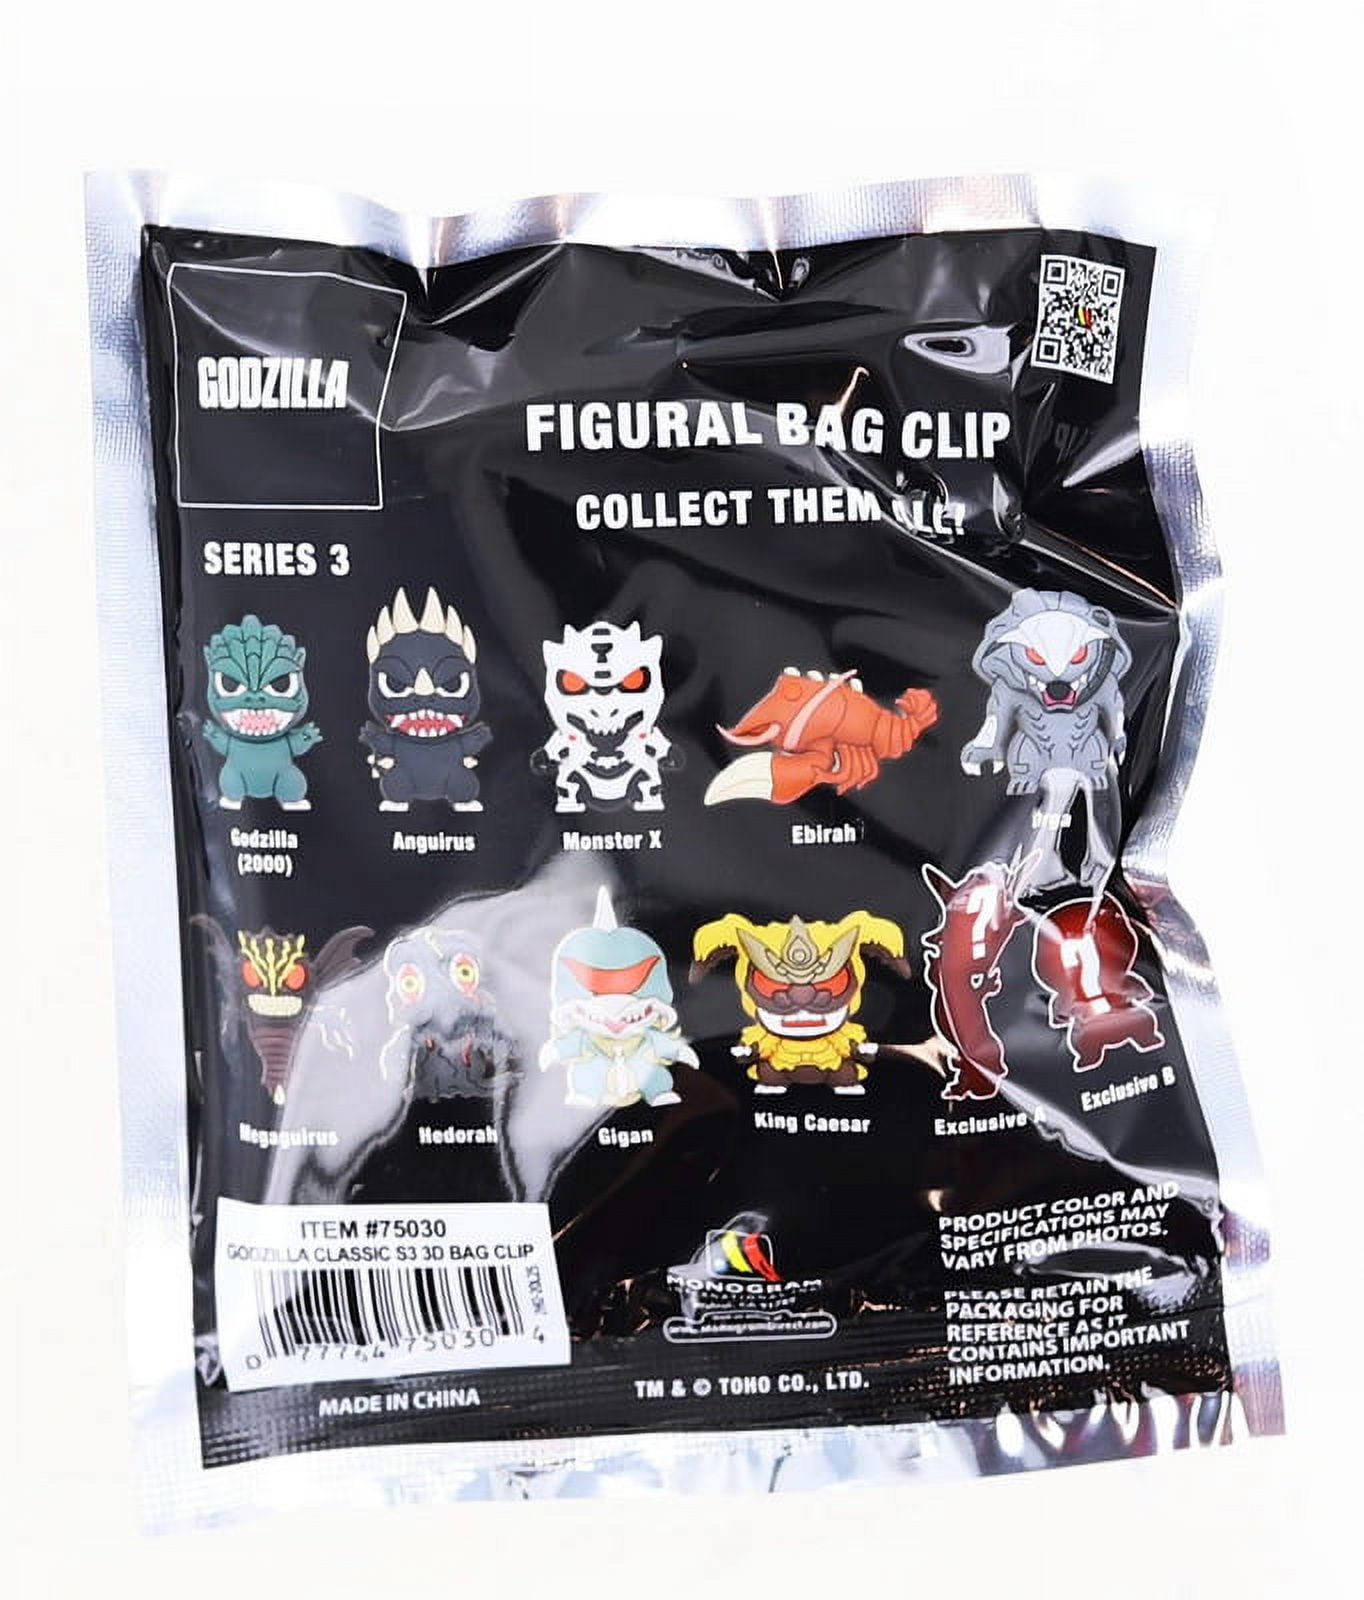 REVIEW: Godzilla Series 3 Figural Bag Clips